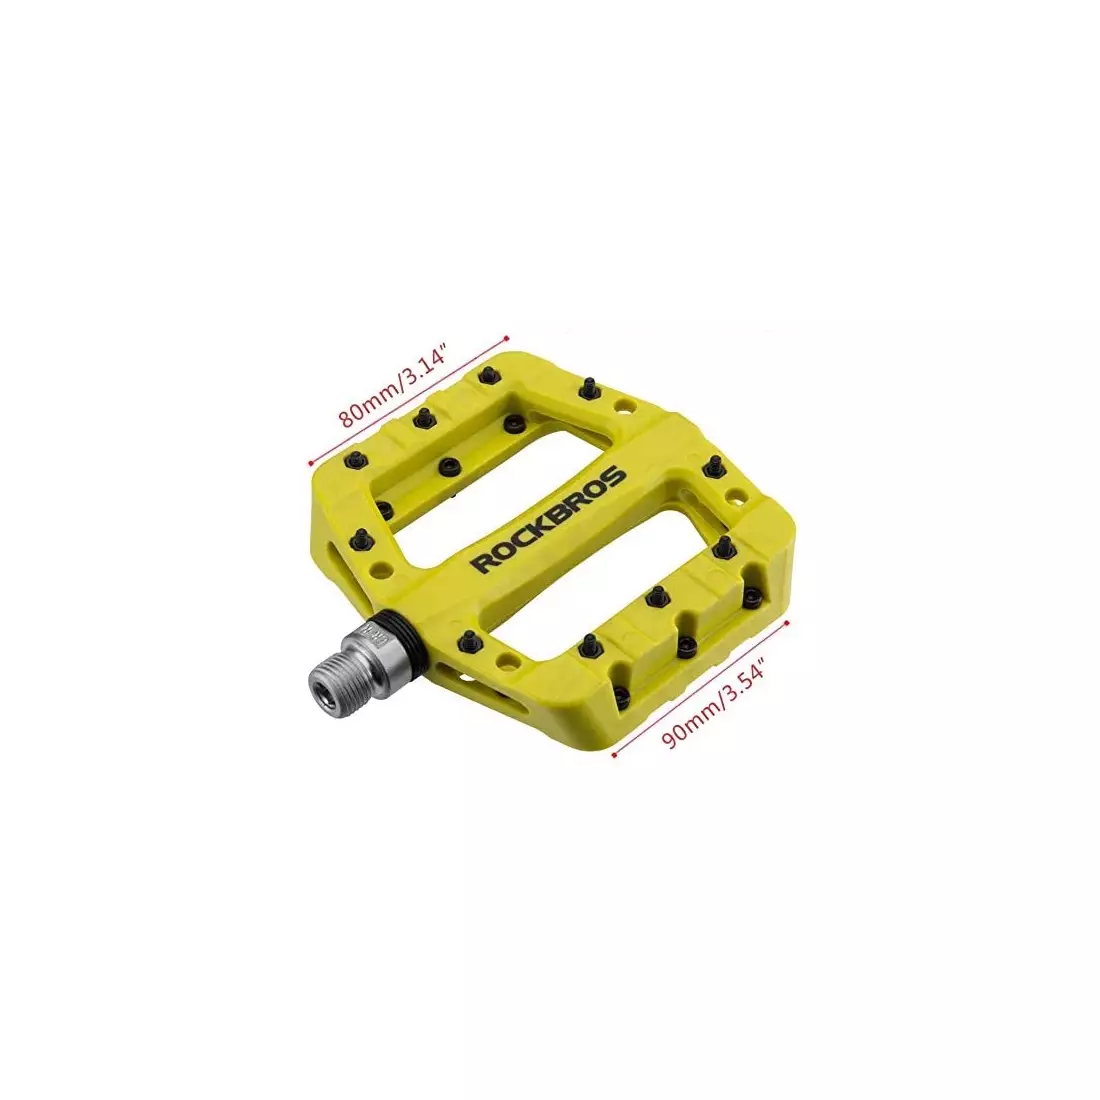 Rockbros platform pedals nylon fluorine yellow 2017-12CGN